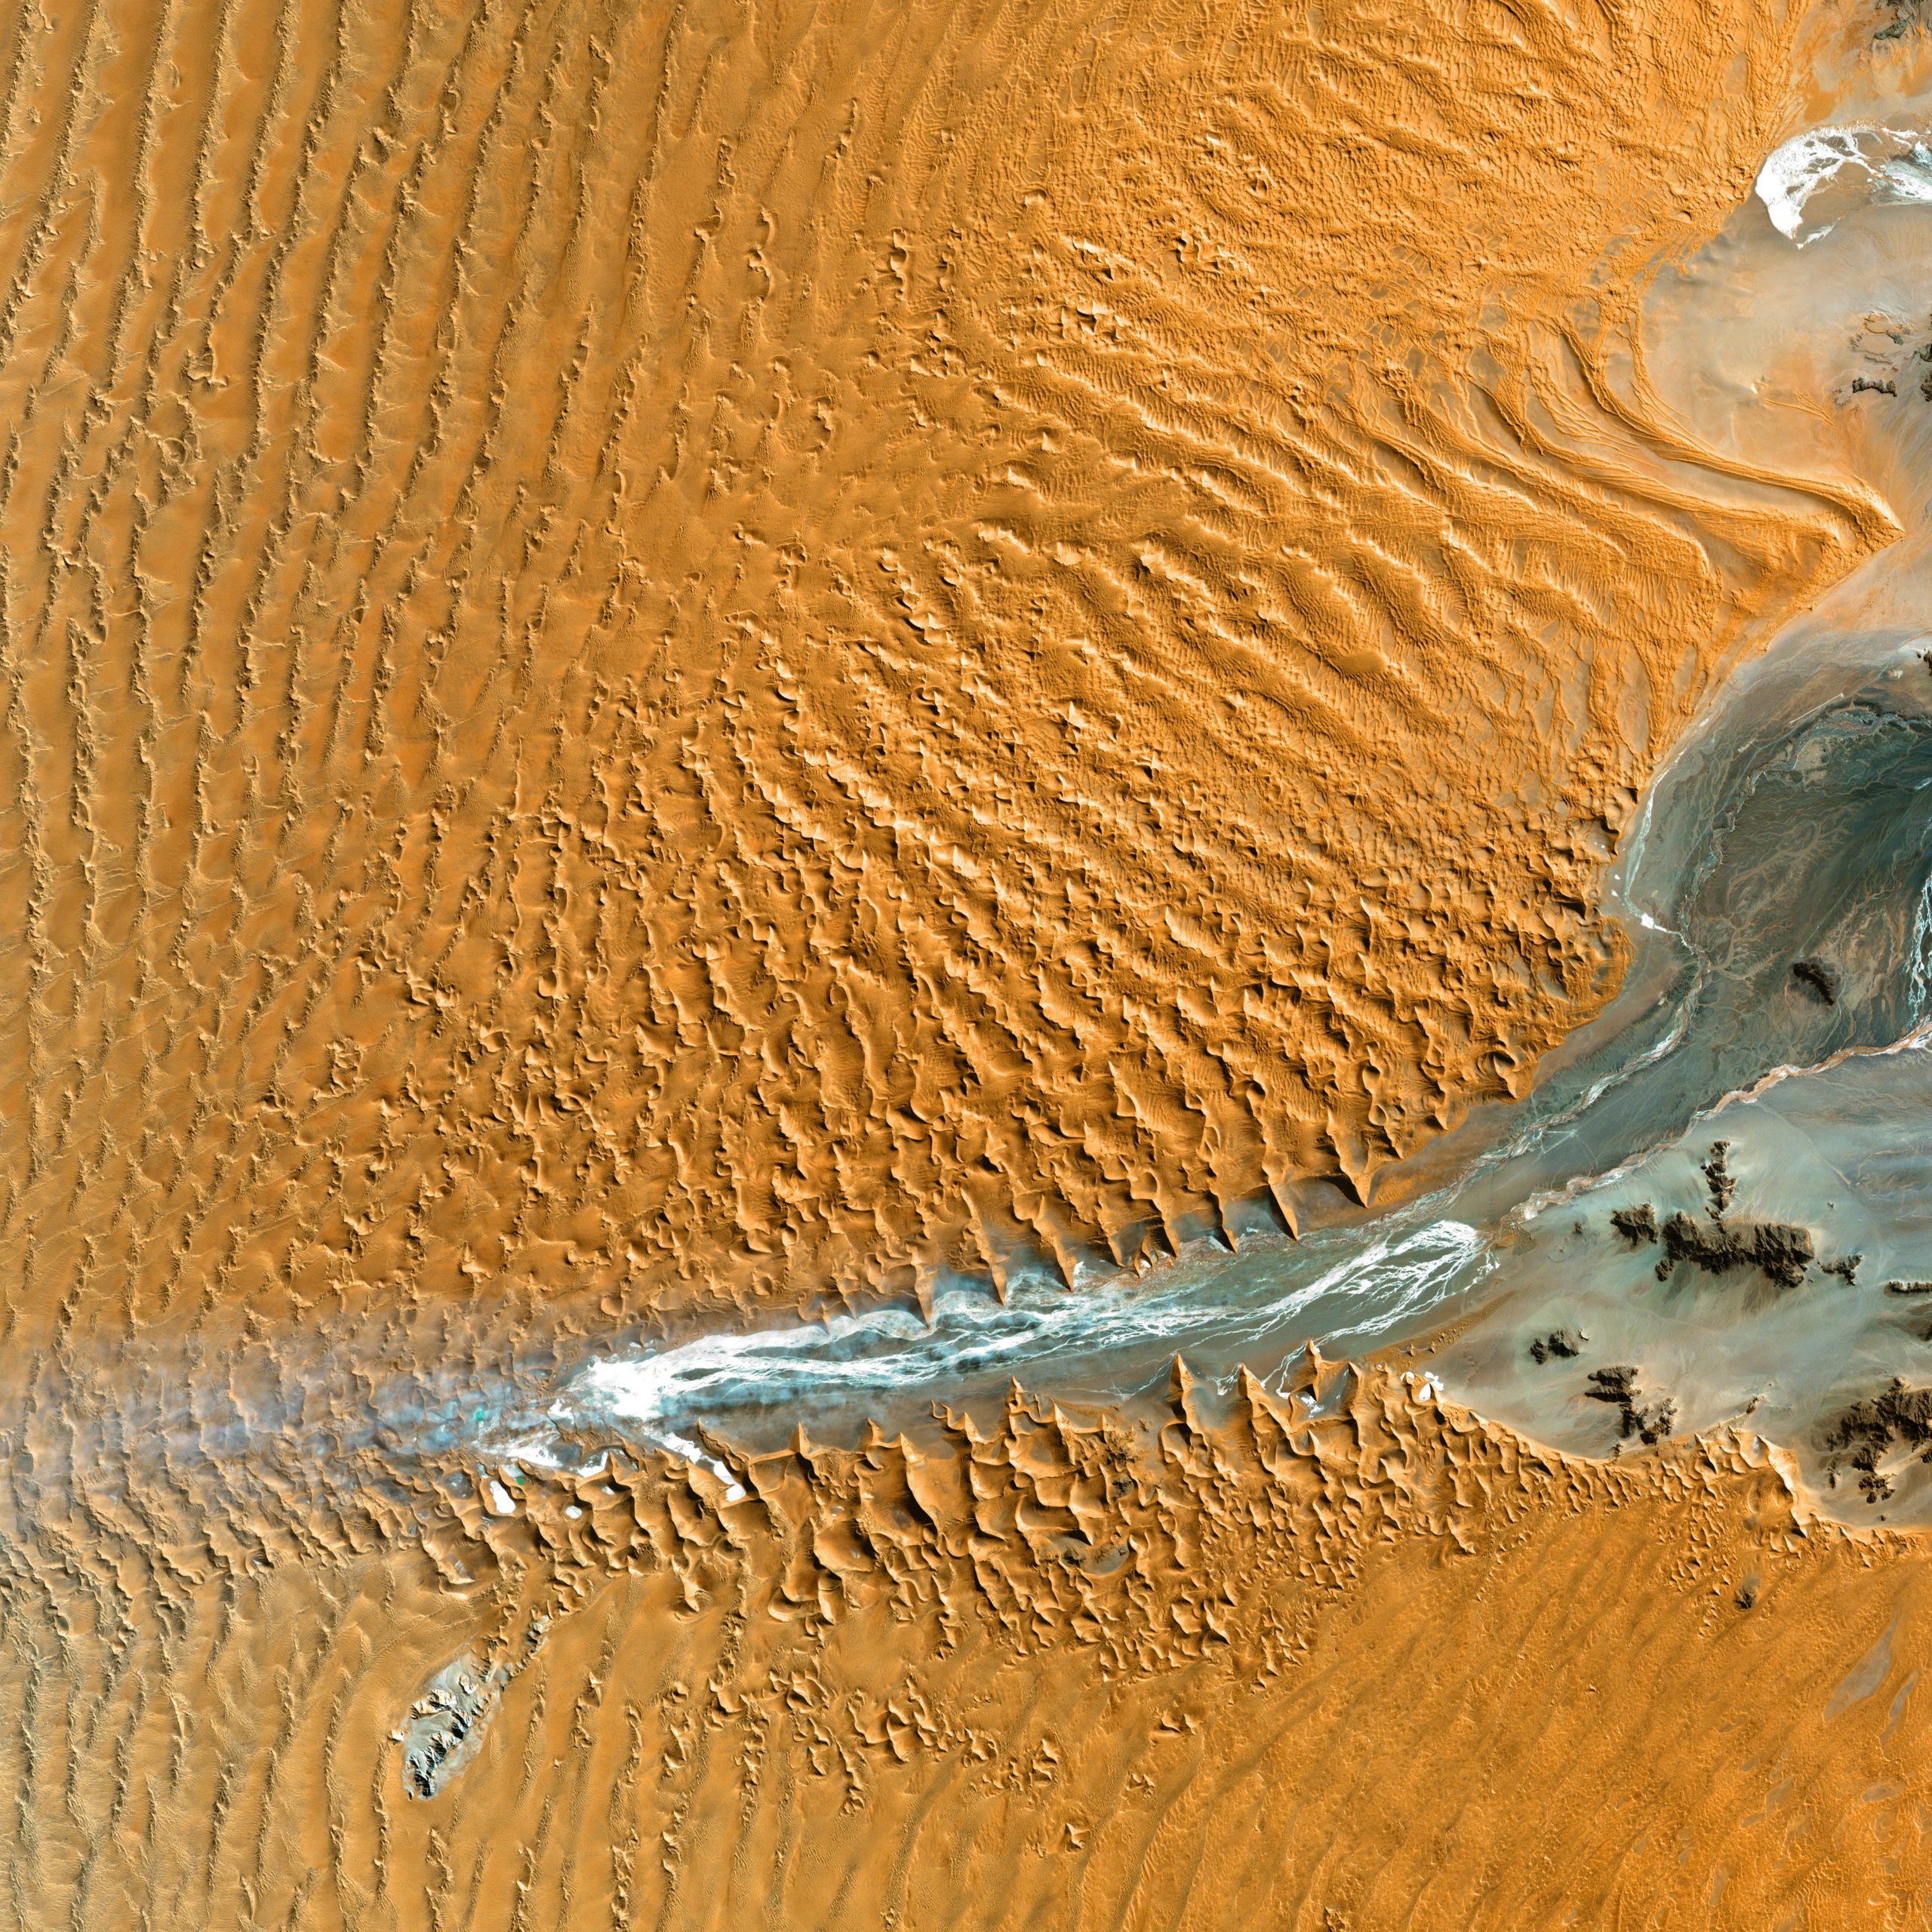 Aerial view of seasonal water body in an orange sand desert in Namibia